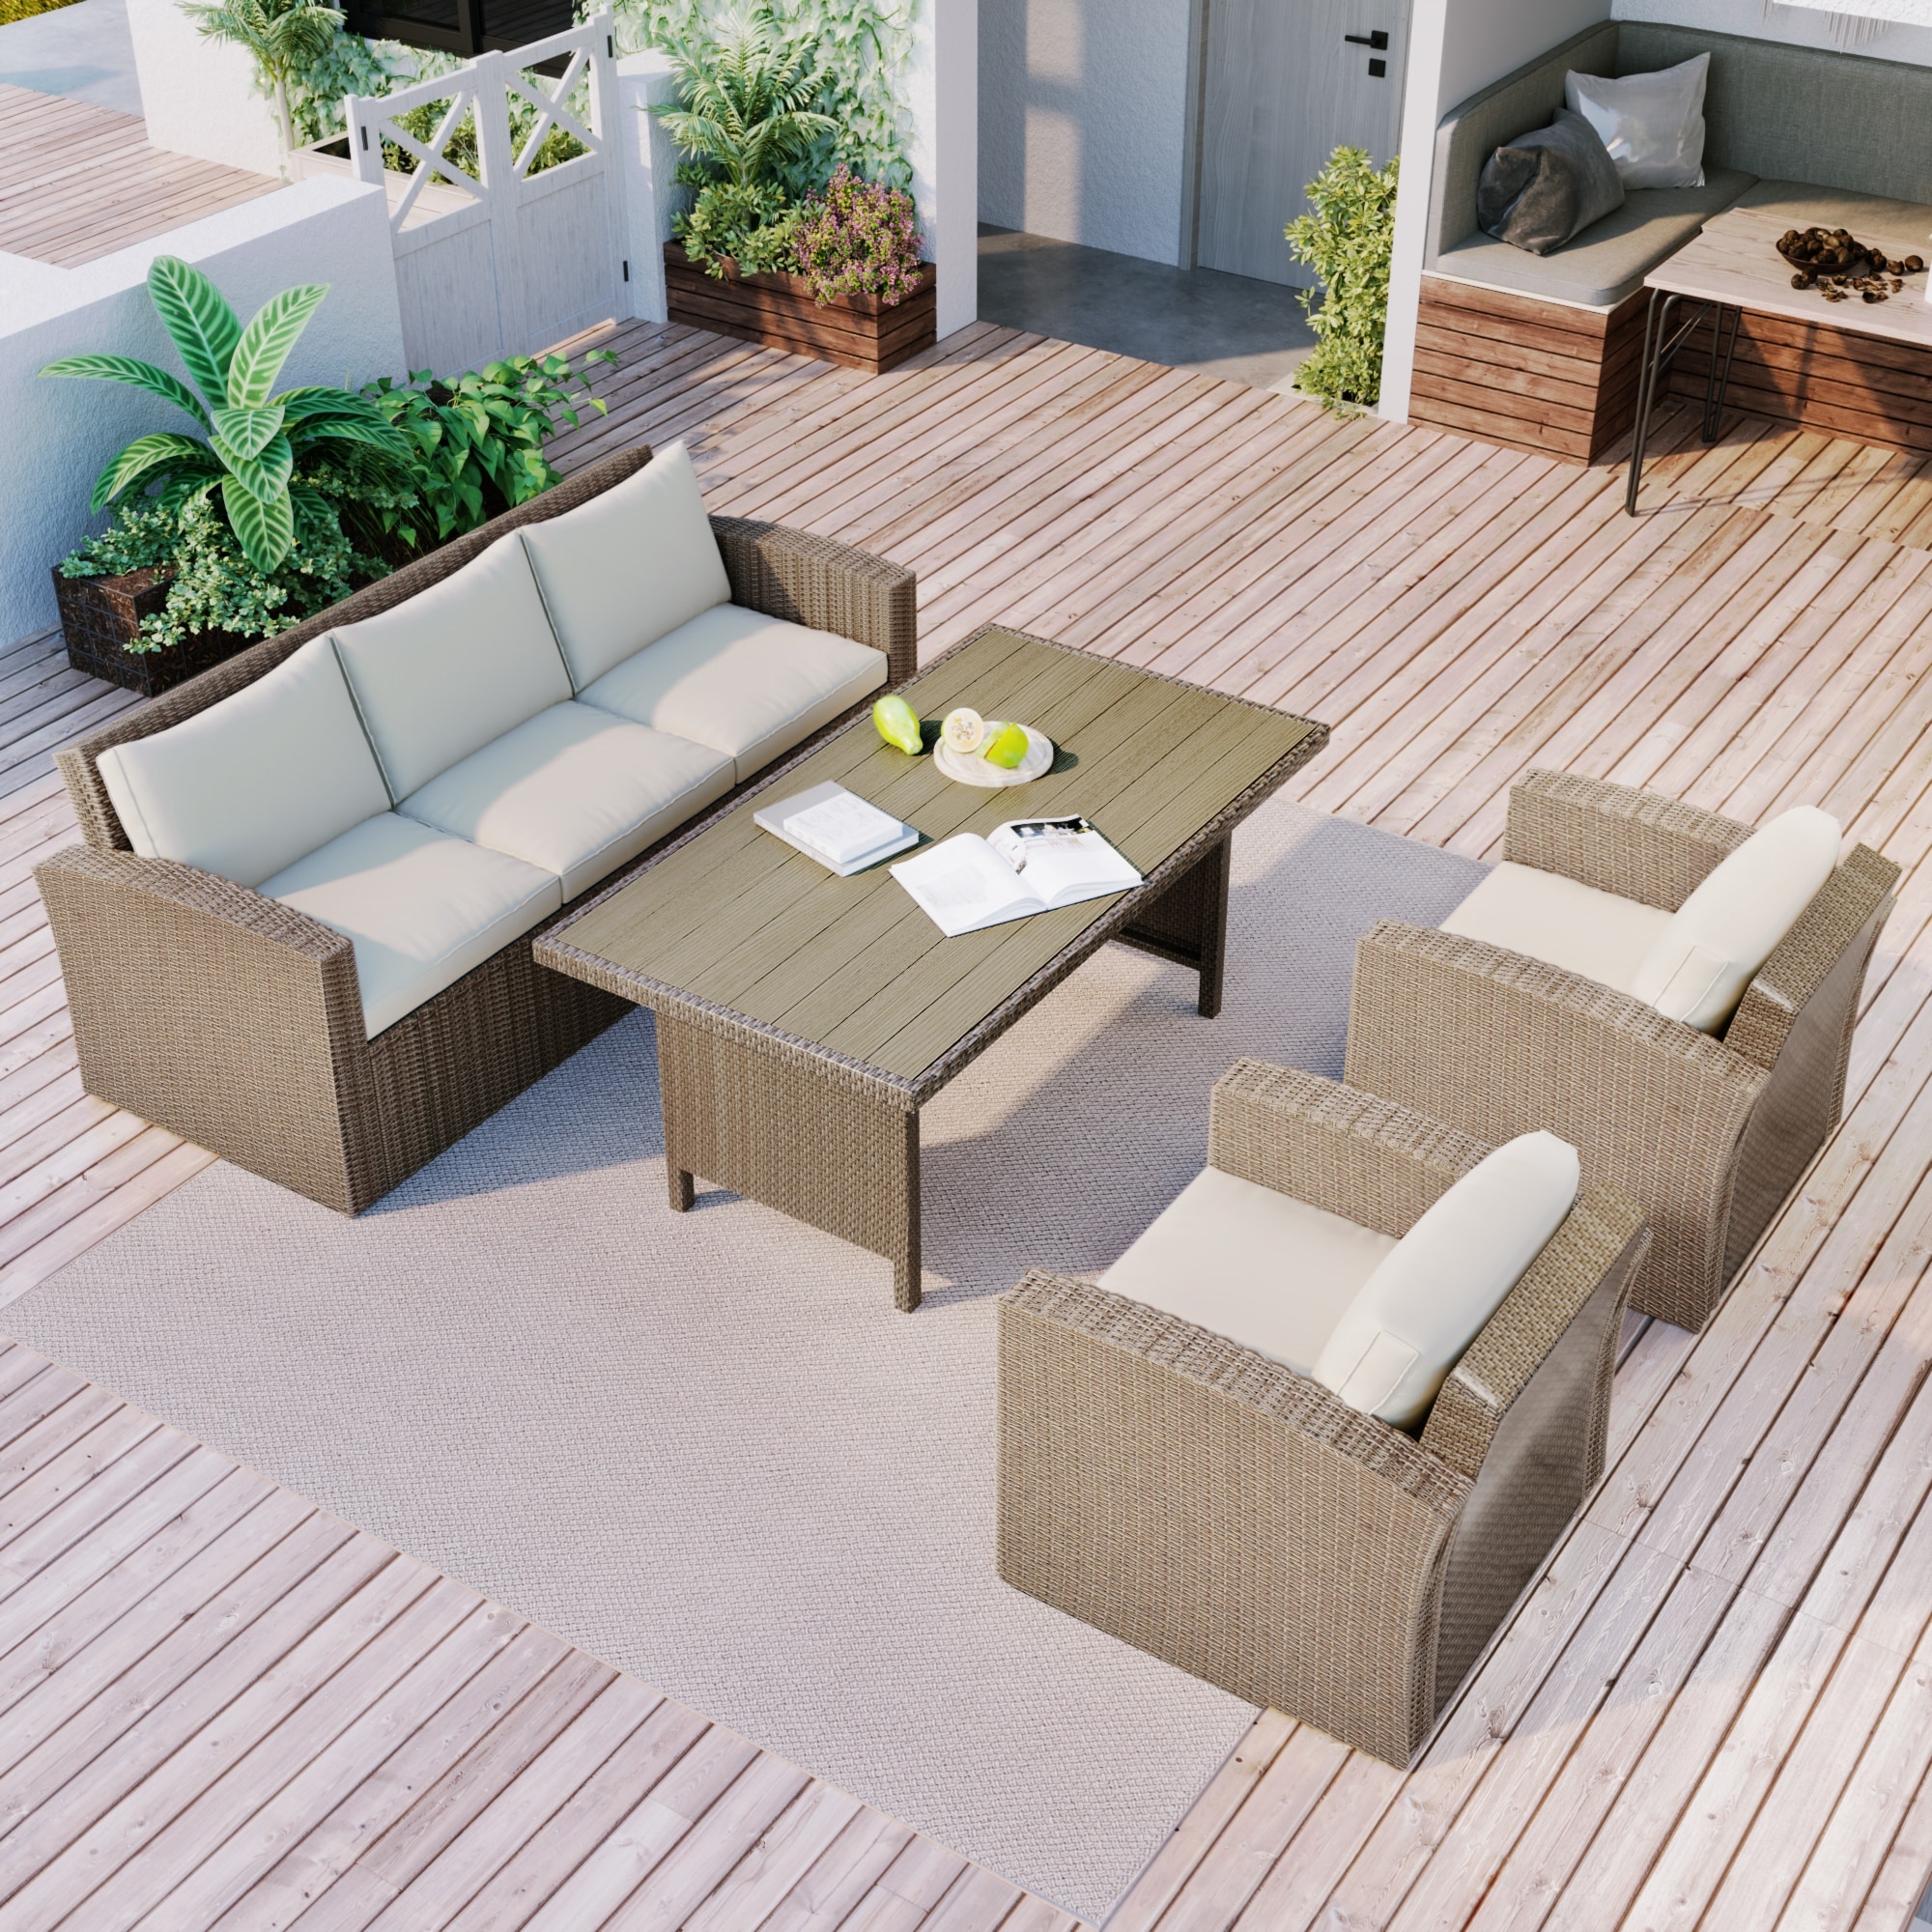 Outdoor Patio Furniture Set 4 Piece Conversation Set Wicker Furniture Sofa Set With Beige Cushions